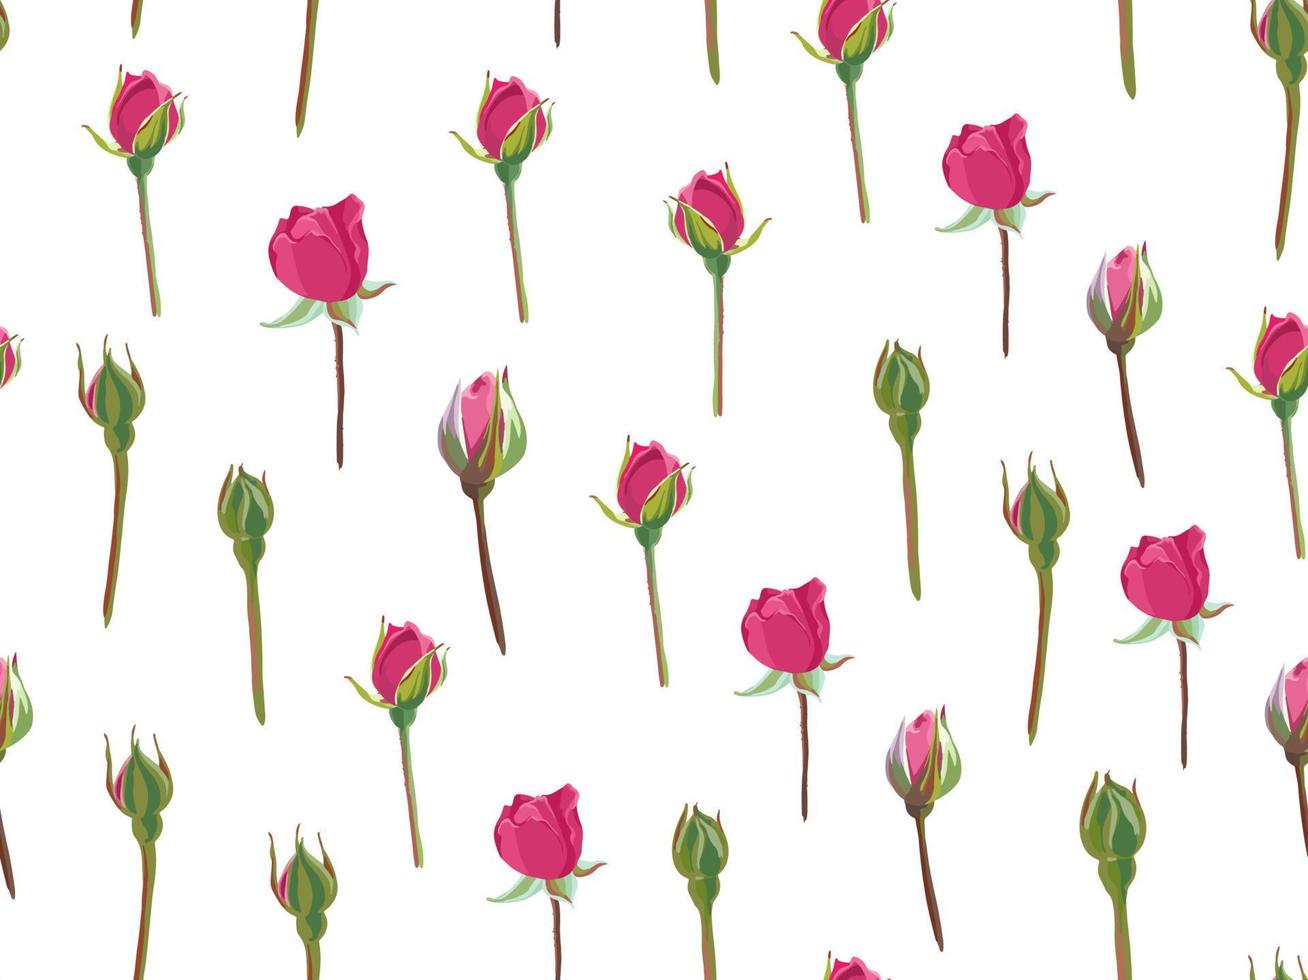 Rose buds in rows, blooming flower pattern vector